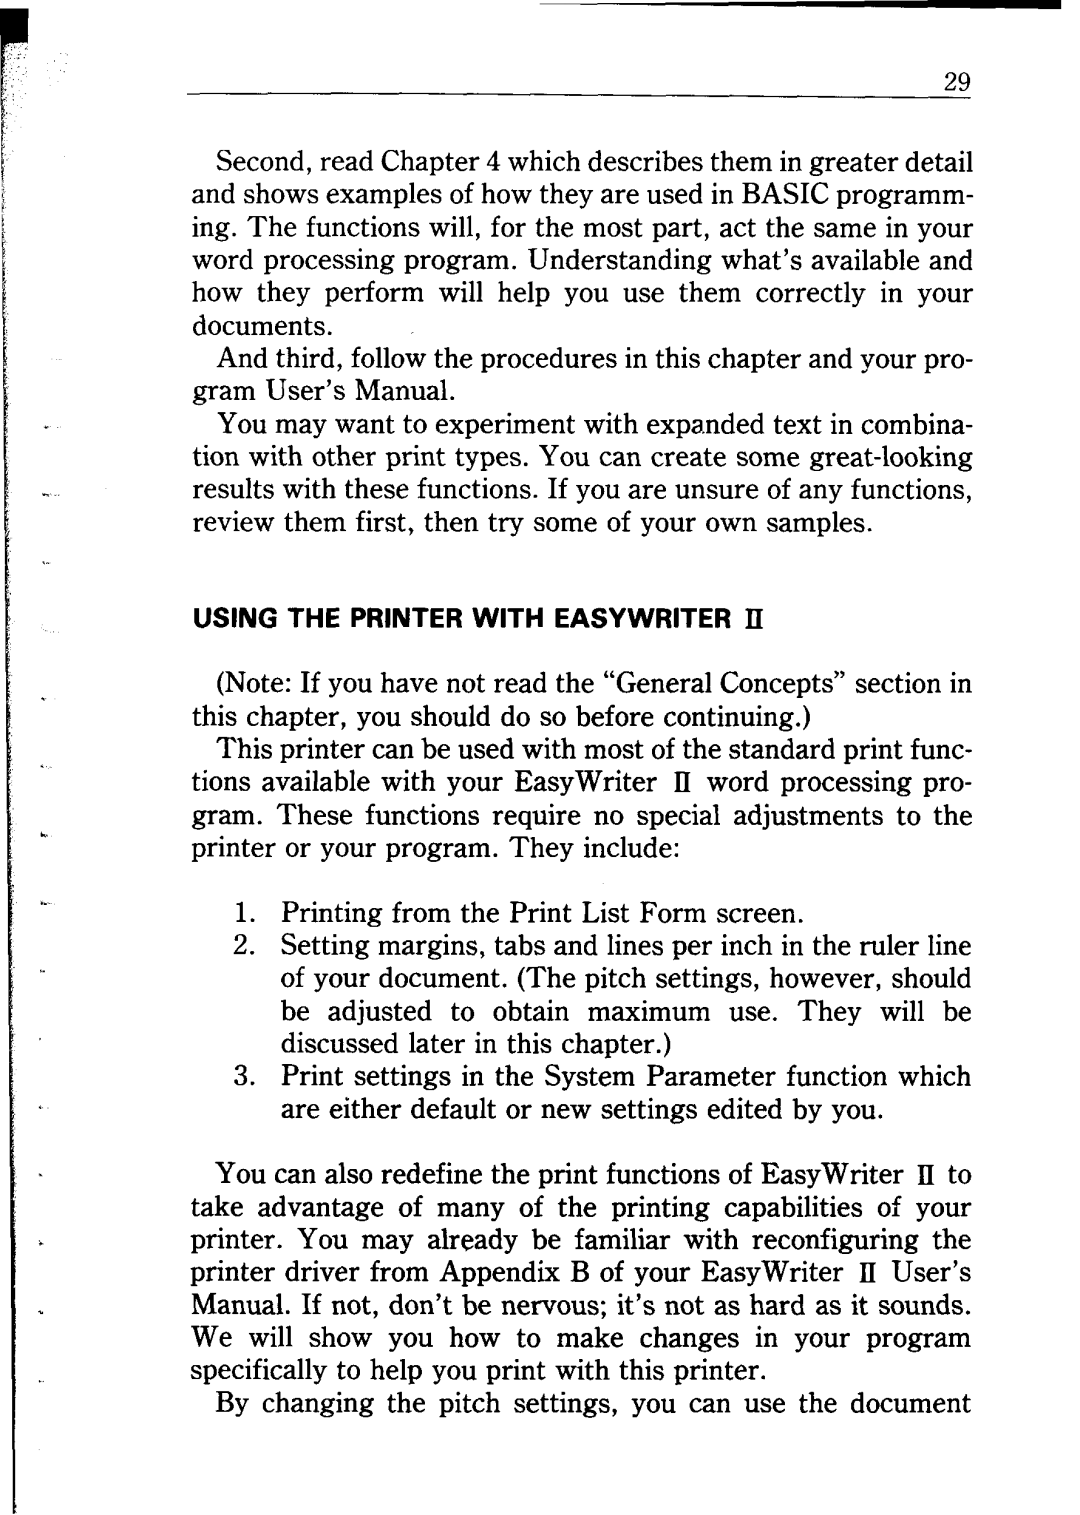 Star Micronics NB24-10/15 user manual Printing from the Print List Form screen 